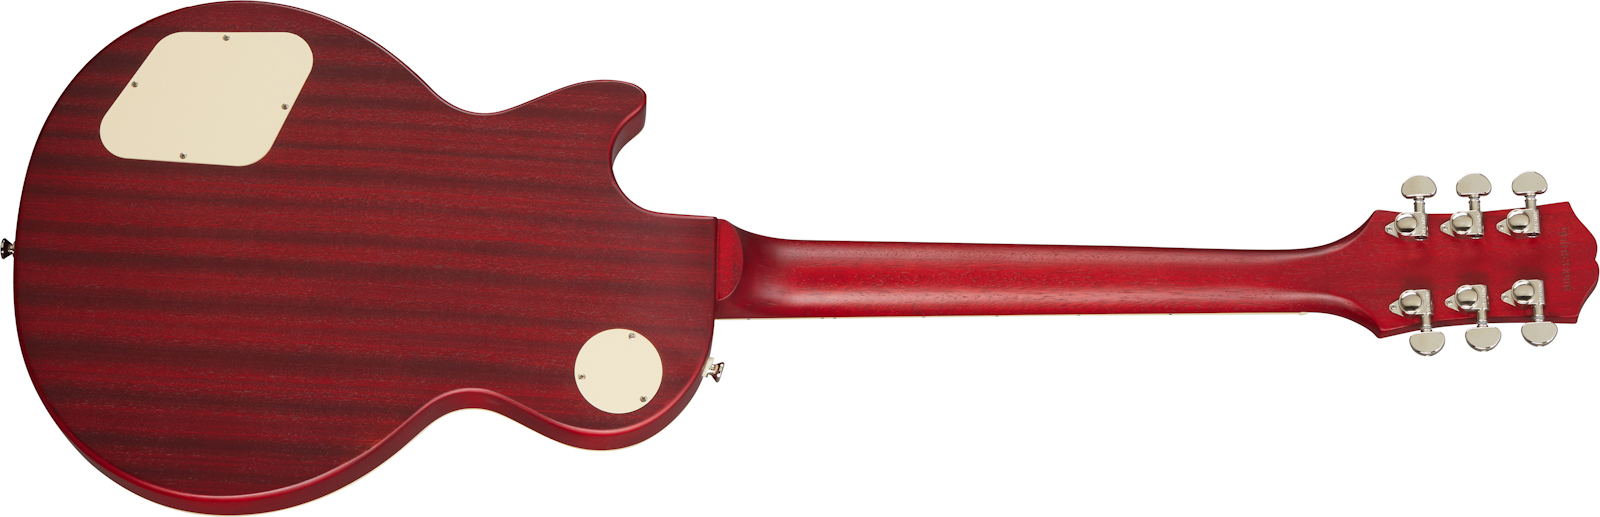 Epiphone Les Paul Classic Worn 2020 Hh Ht Rw - Worn Heritage Cherry Sunburst - Single cut electric guitar - Variation 1